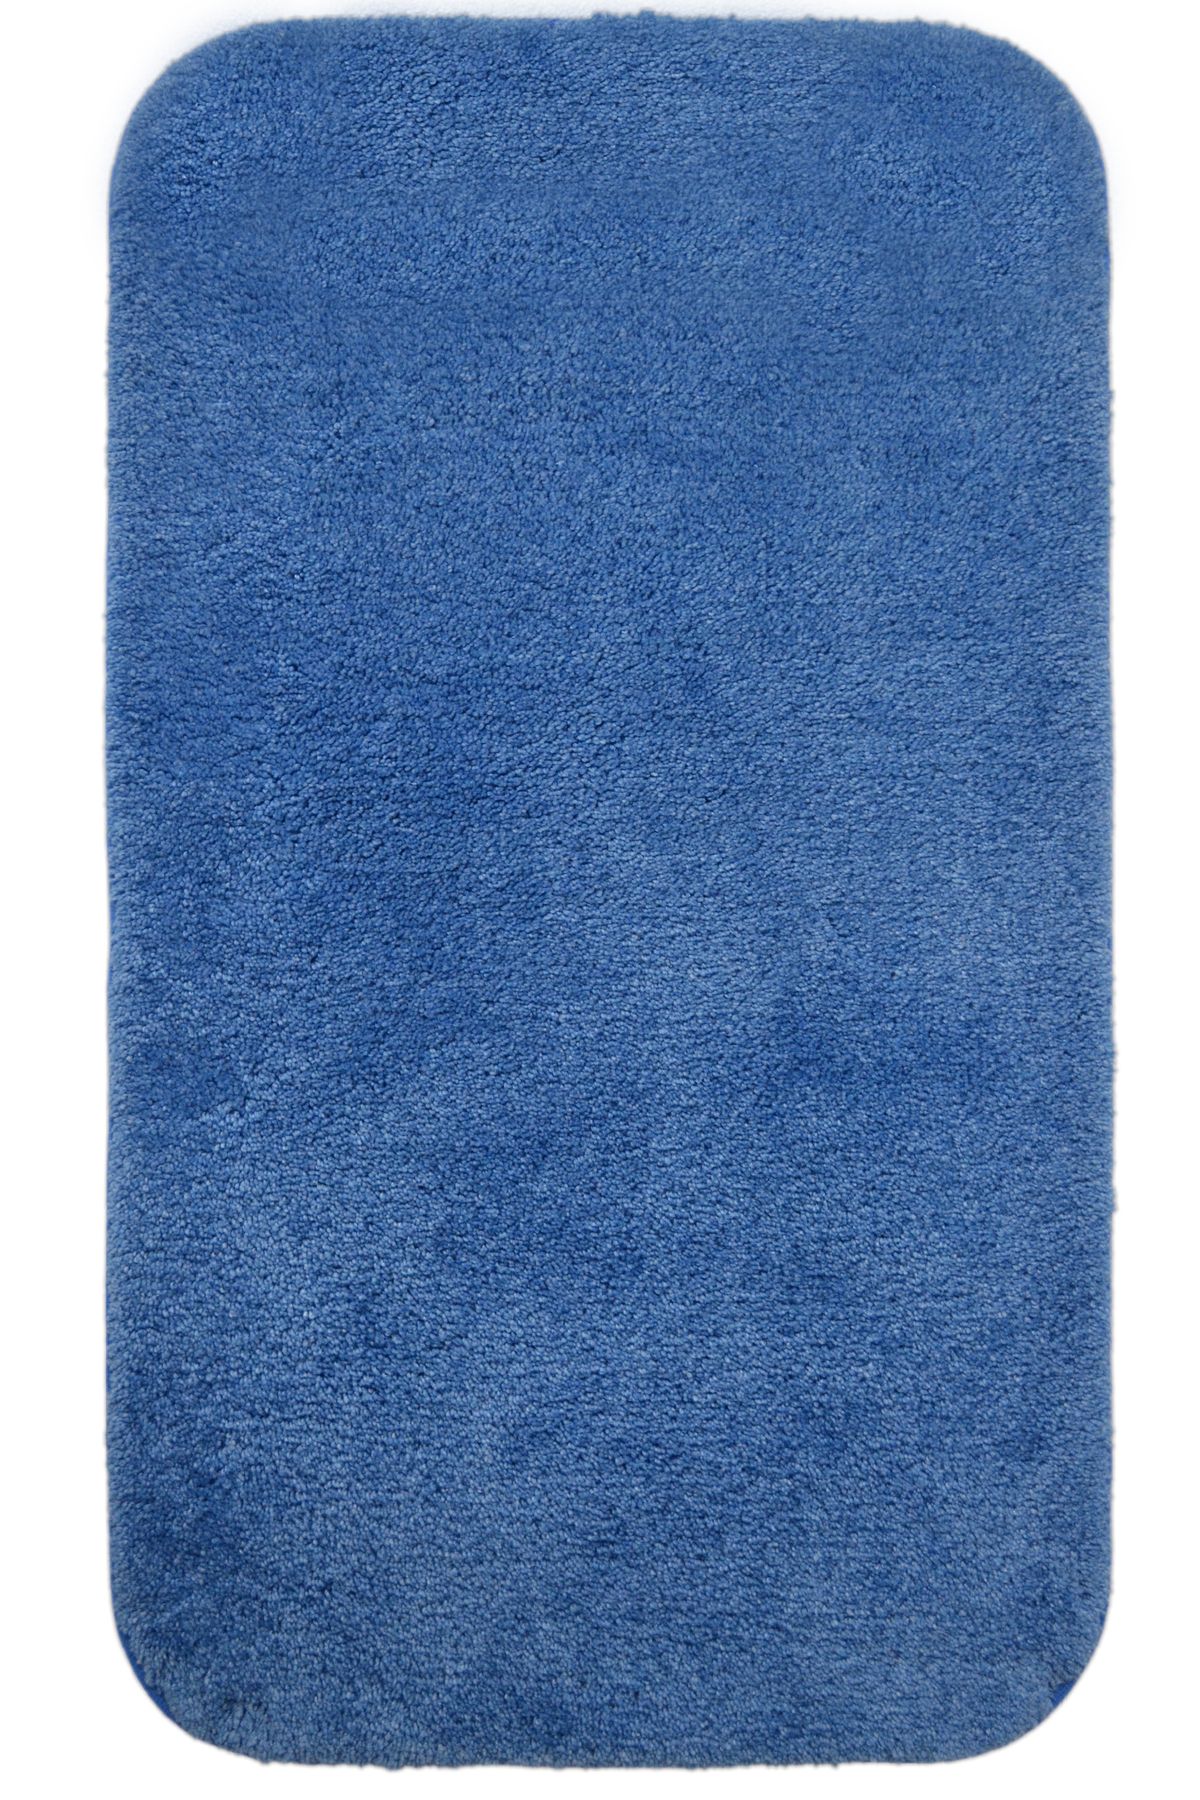 Confetti Atlanta Koyu Mavi Banyo Halısı 50x57